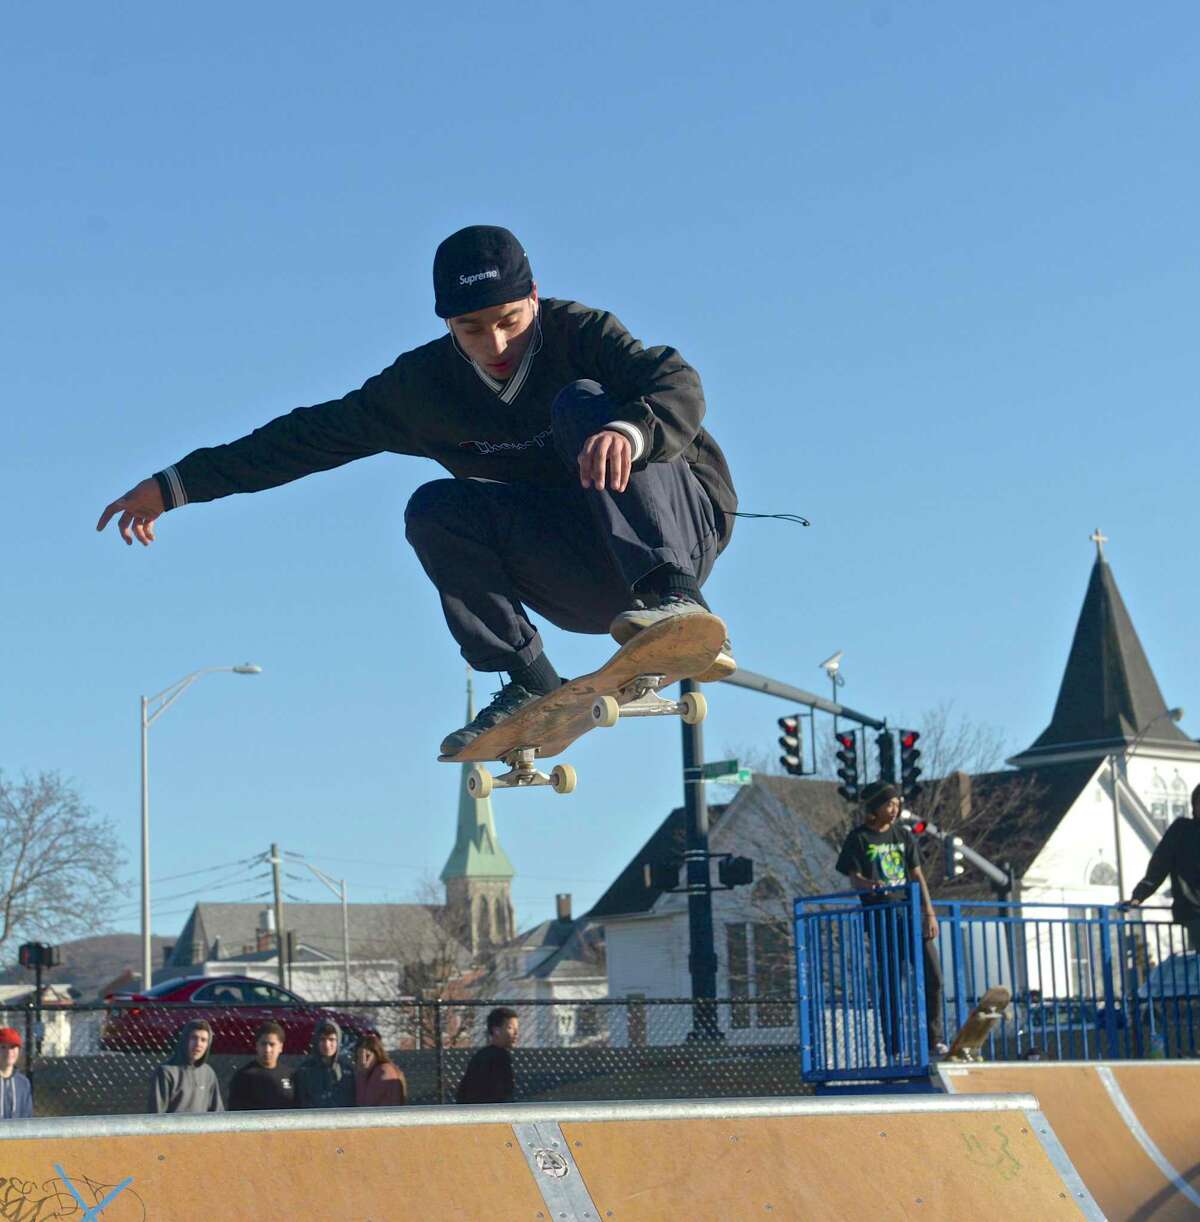 Shakiem Guyton, 17, of Danbury, catches some air at the Danbury Municipal Skateboard Park, on Wednesday, April 1, 2015, in Danbury, Conn.